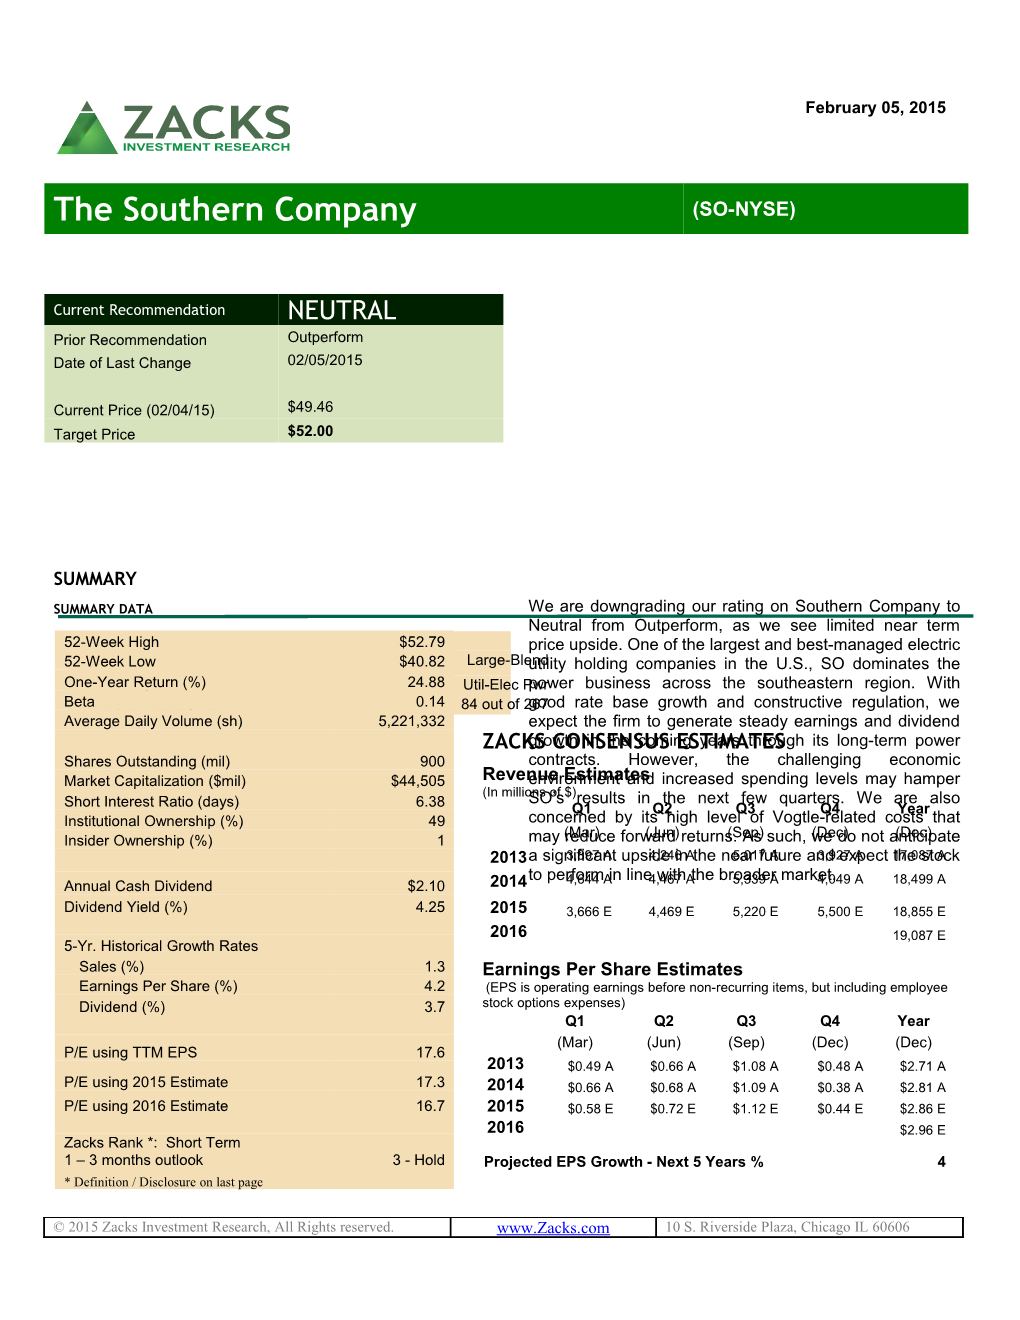 The Southern Company